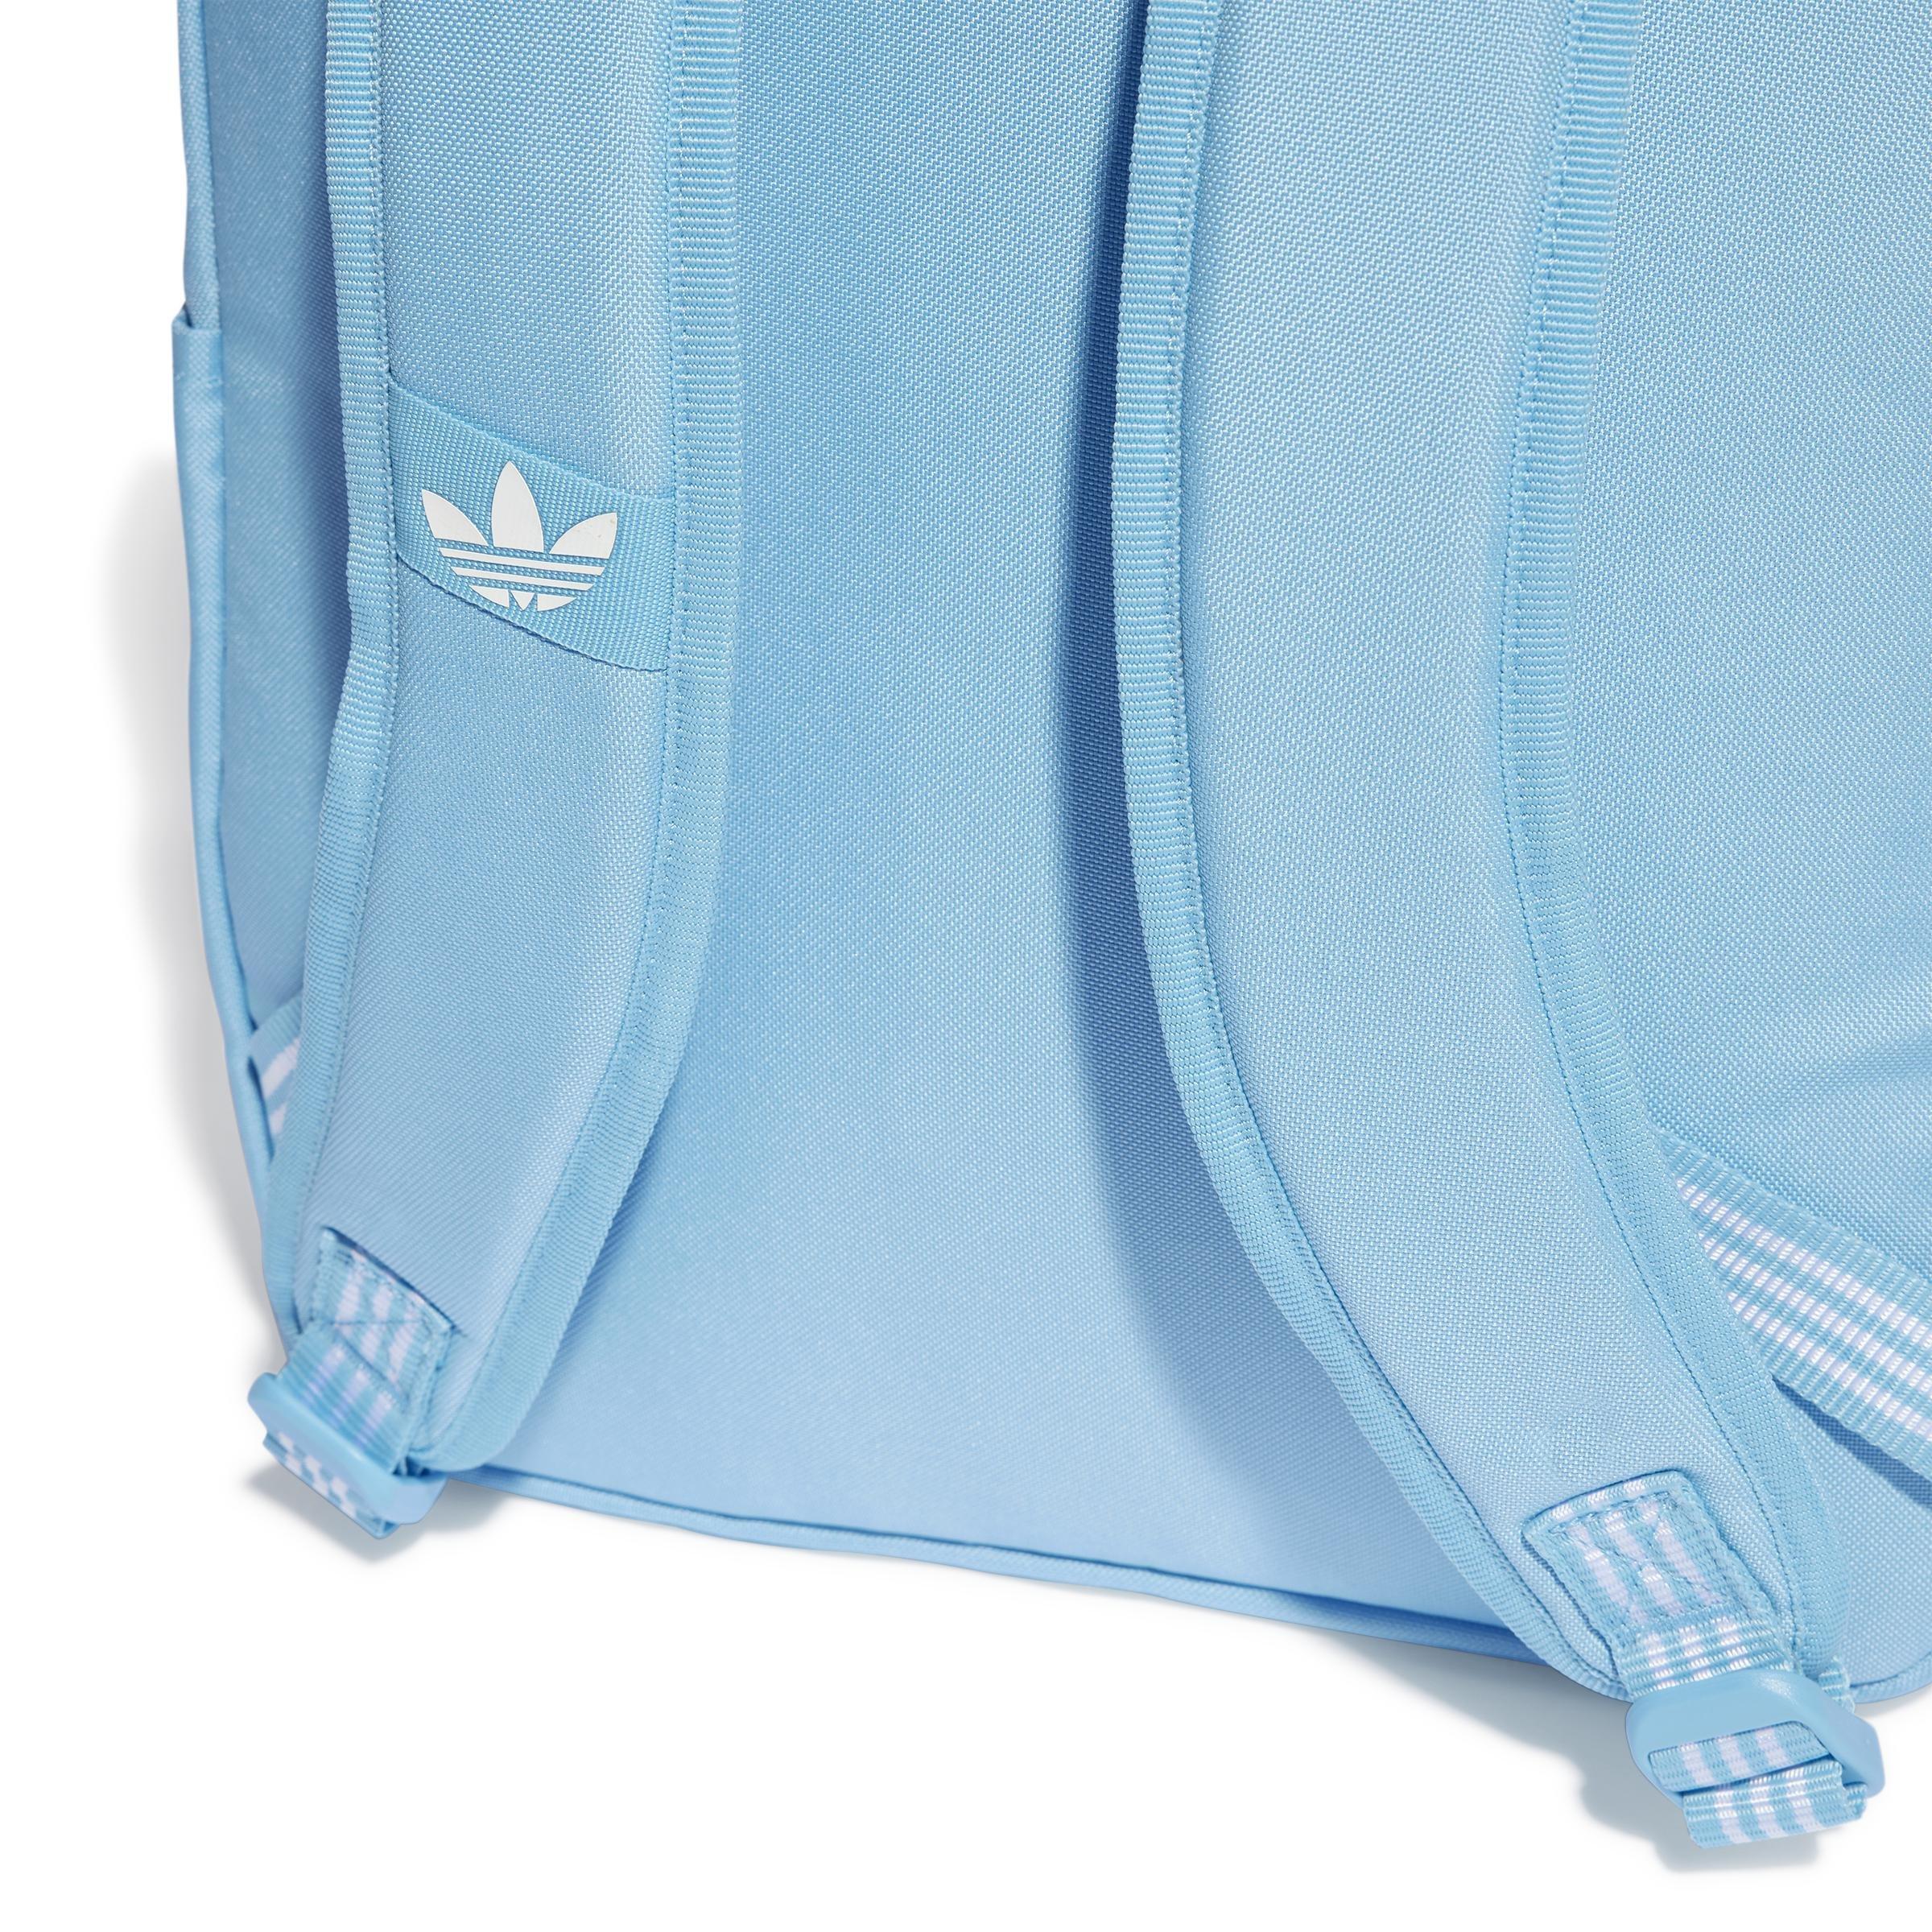 adidas - Unisex Adicolor Backpack, Blue